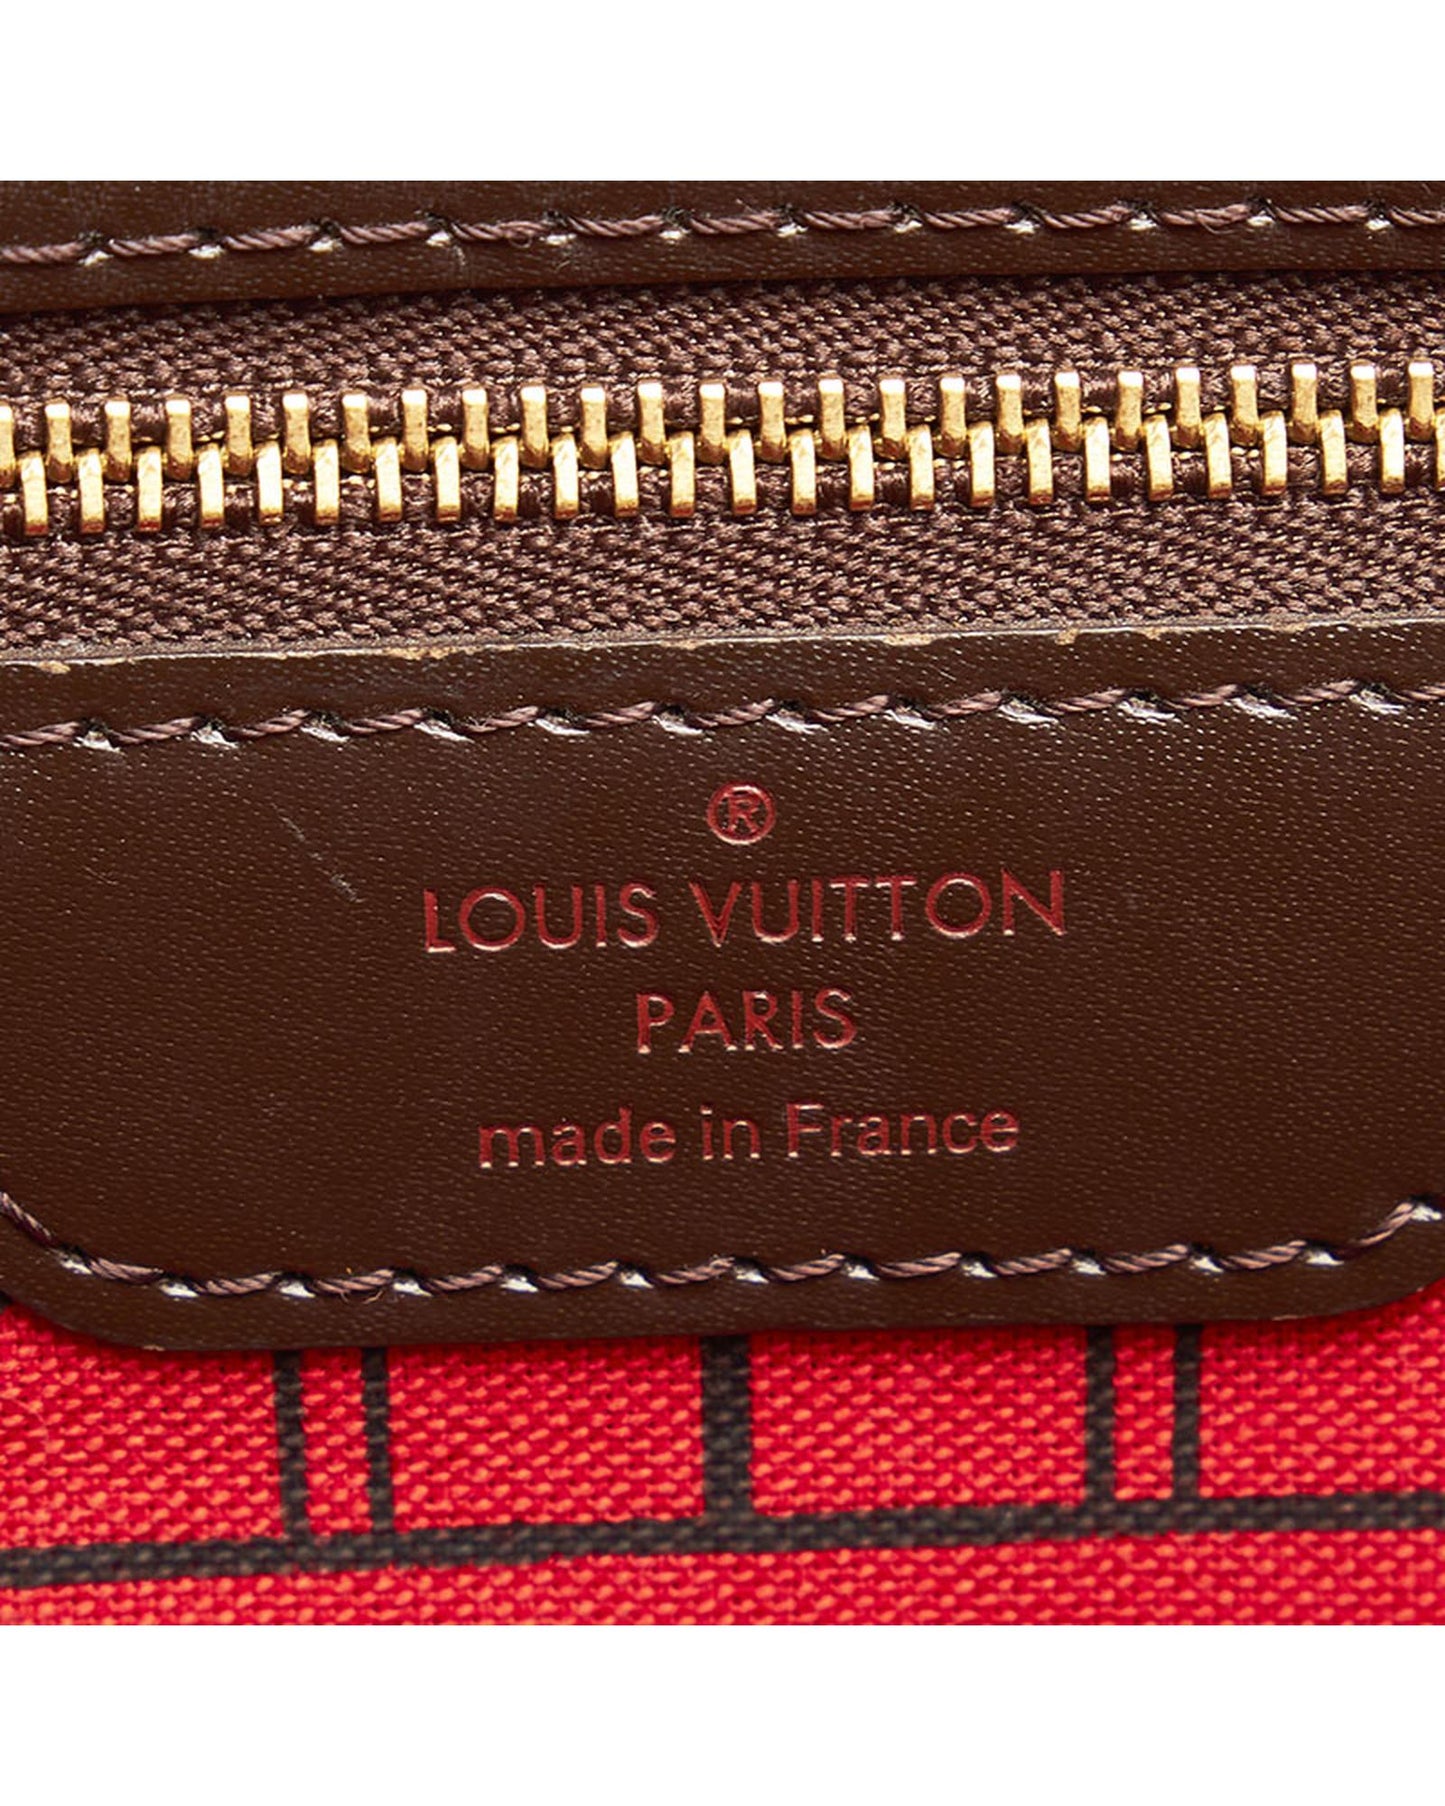 Louis Vuitton Women's Classic Damier Ebene Tote Bag in Brown